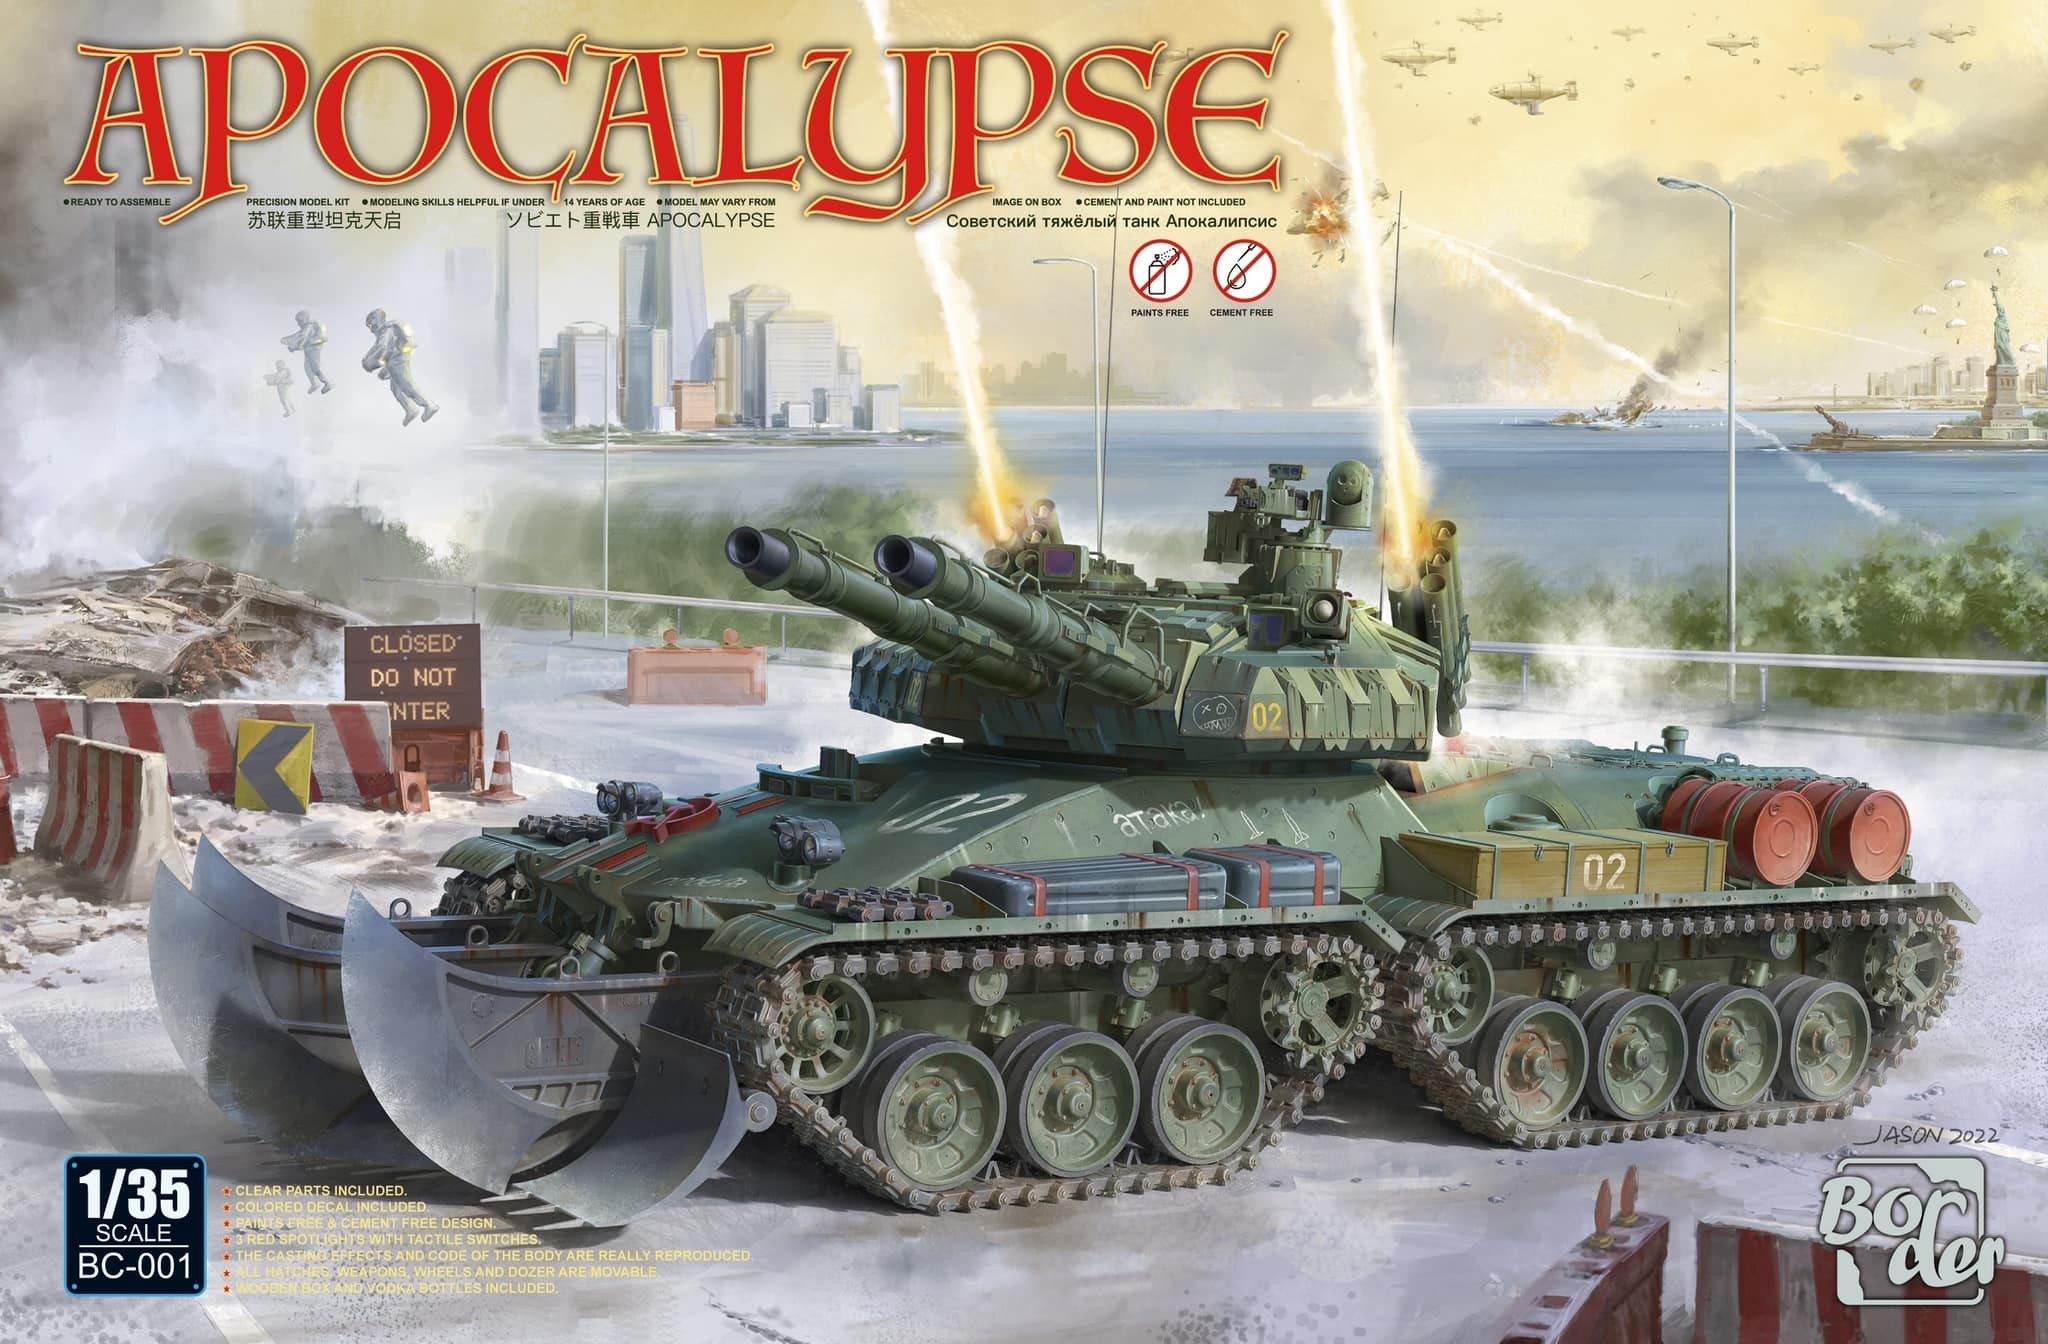 BC001 Soviet Apocalypse Tank